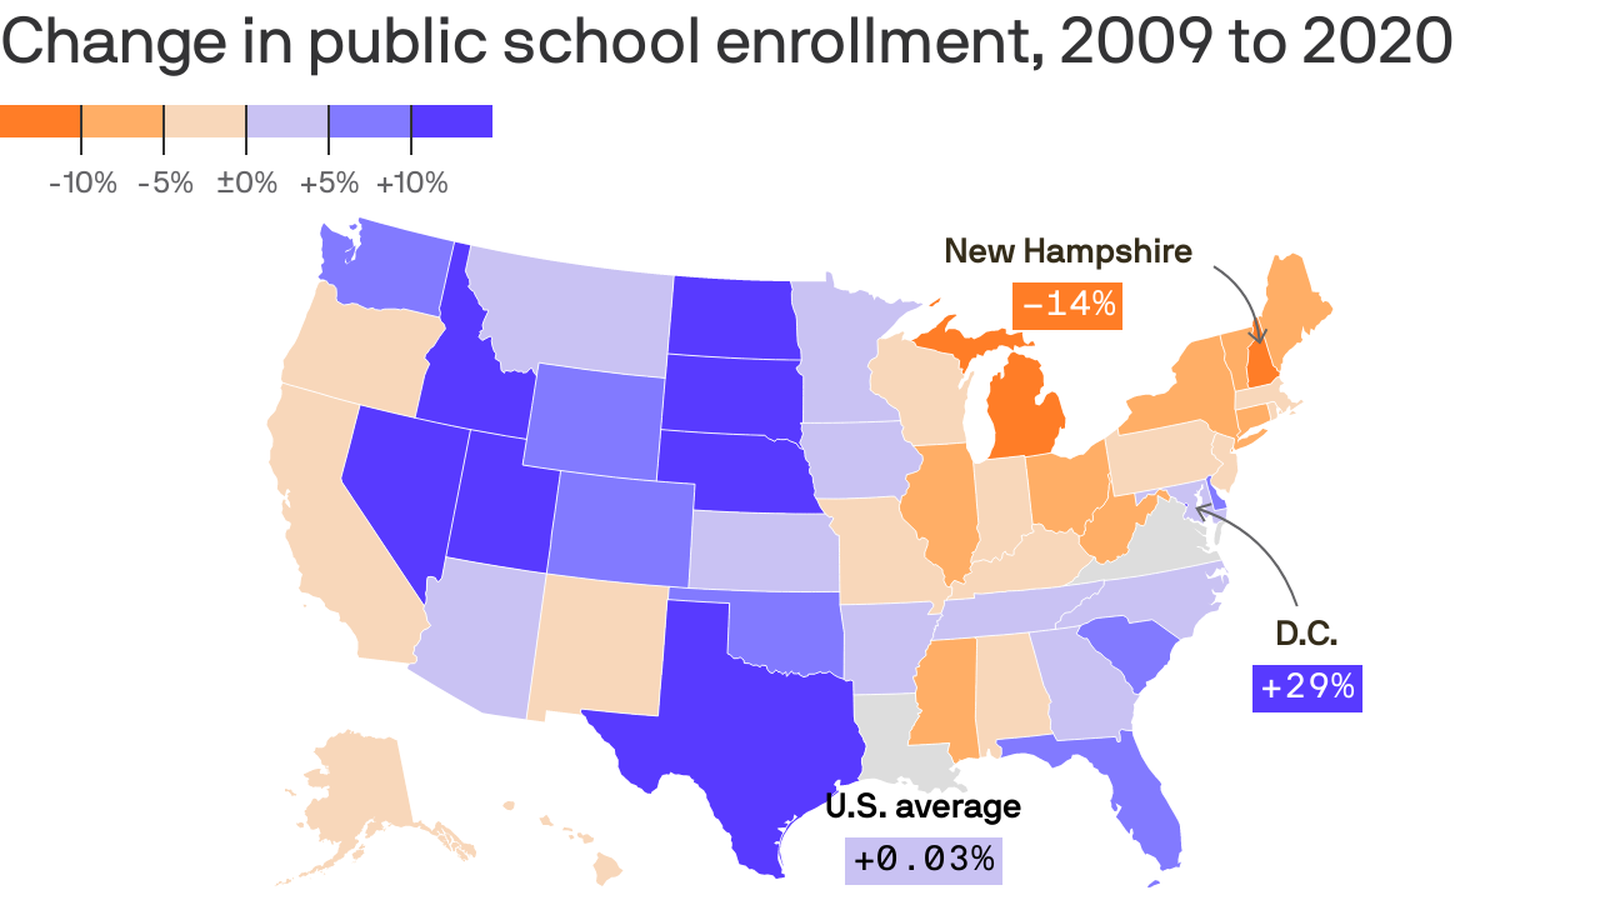 America's public schools are losing students